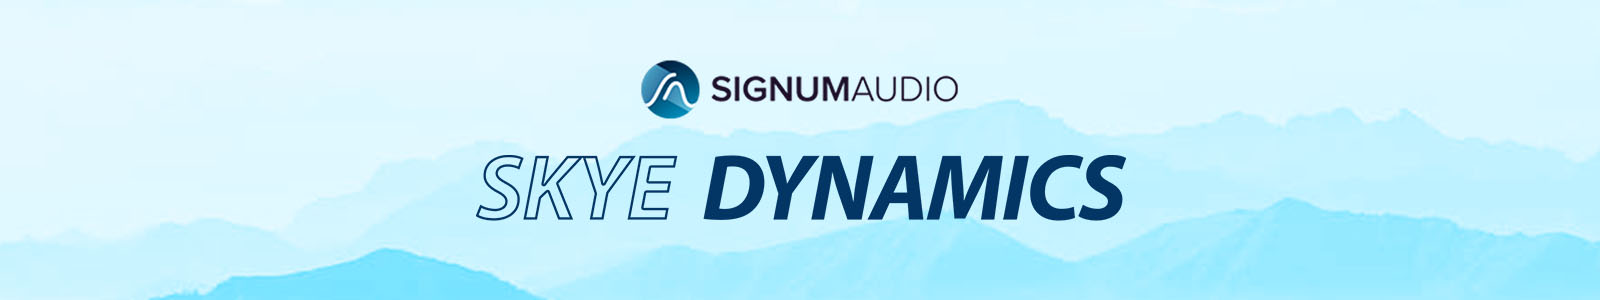 Signum Audio Skye Dynamics Stereo